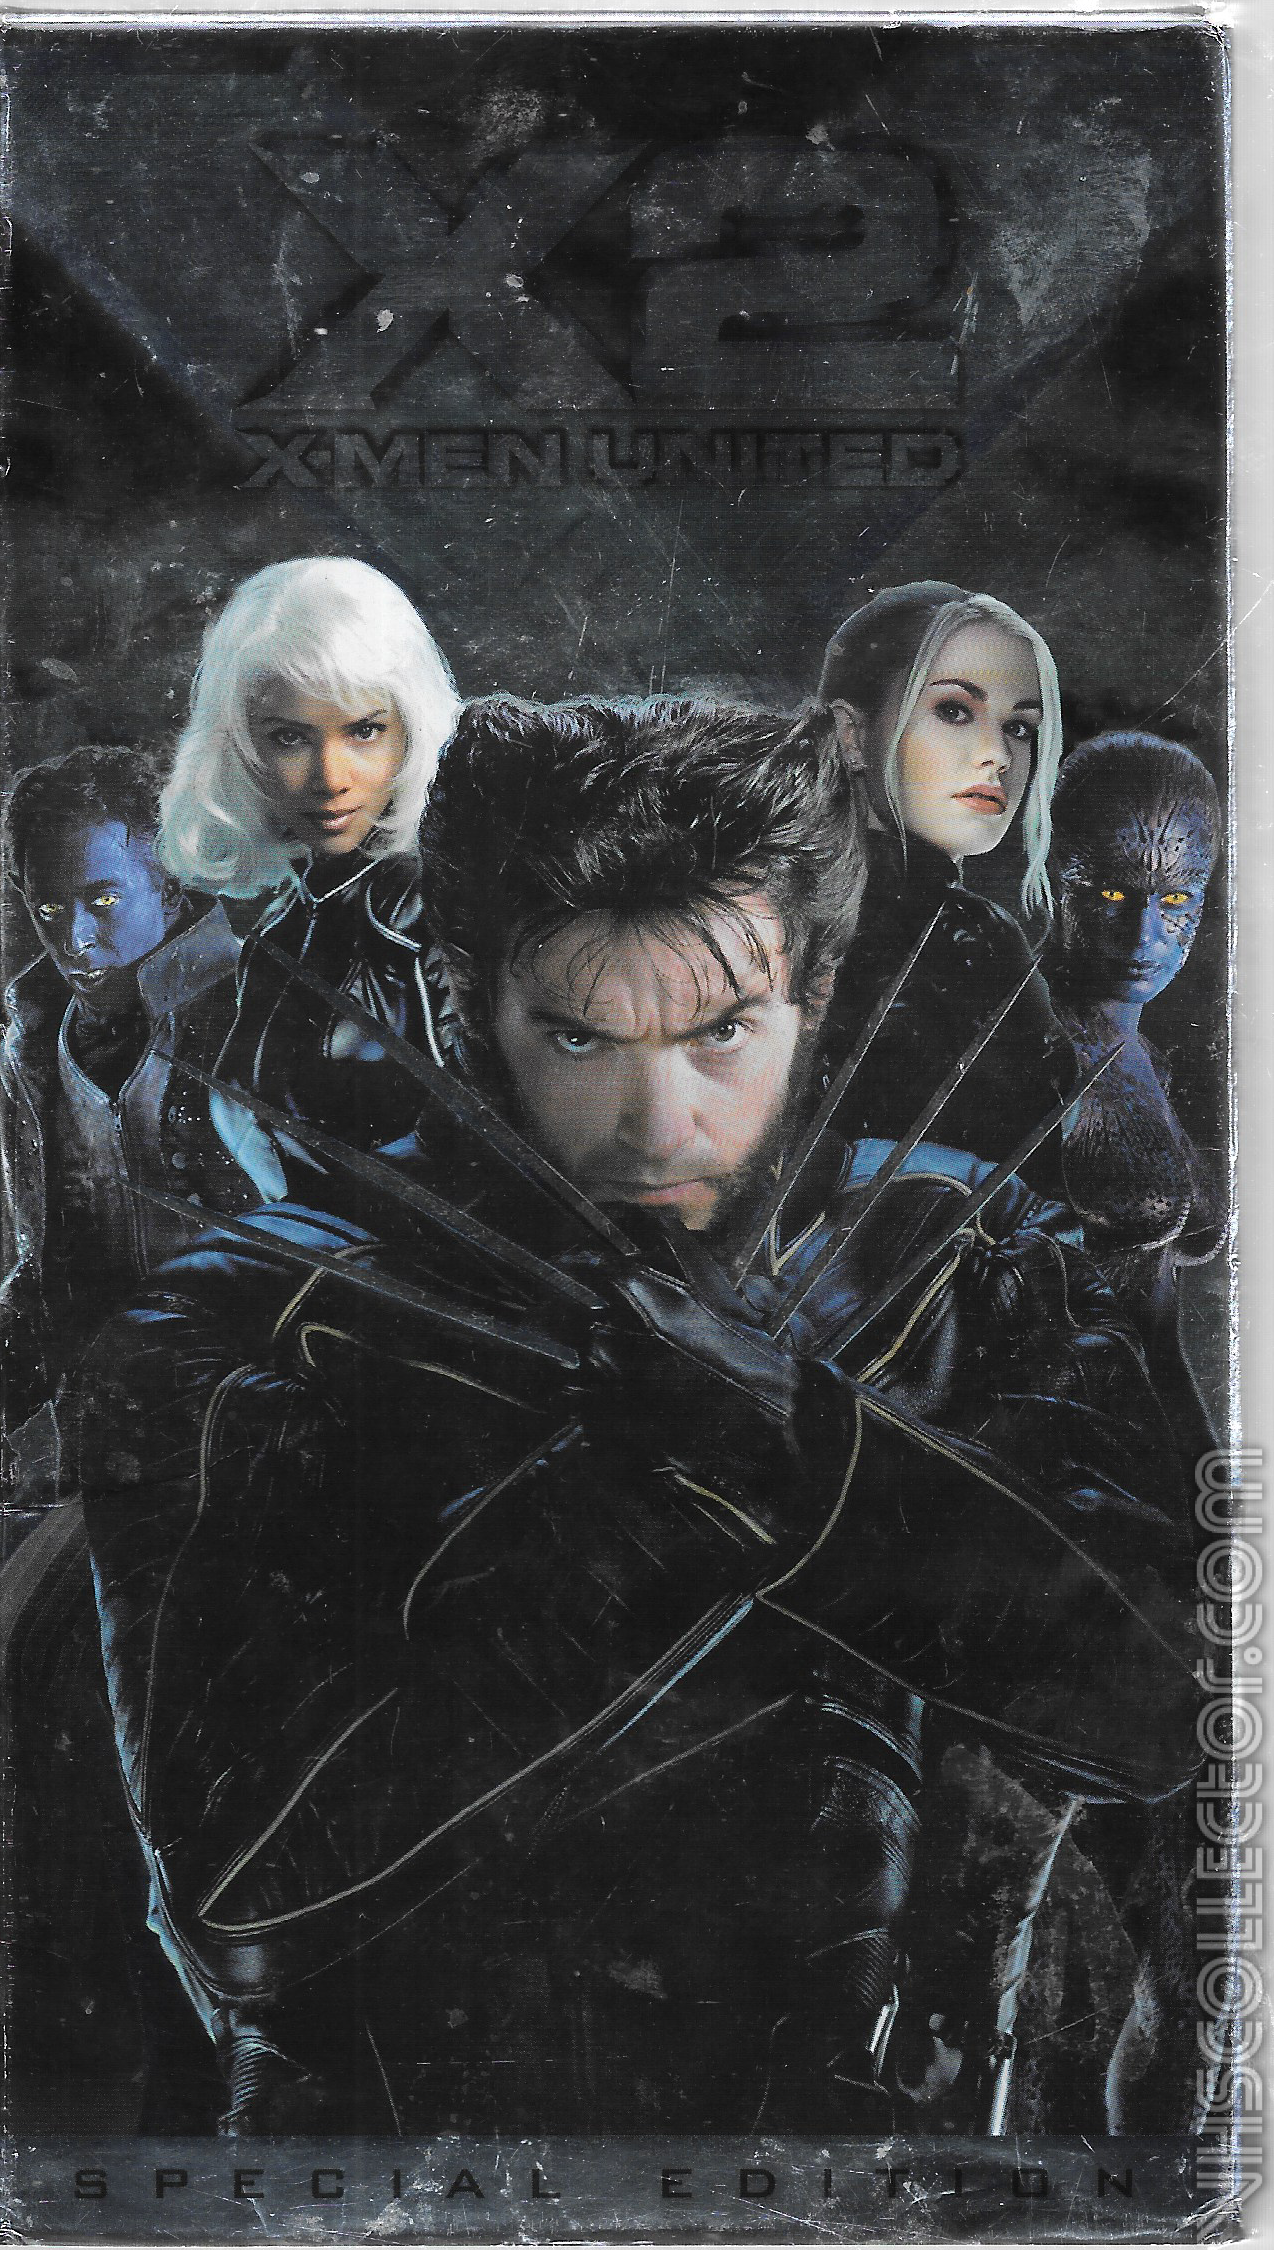 HQ X2: X-Men United Wallpapers | File 4495.07Kb